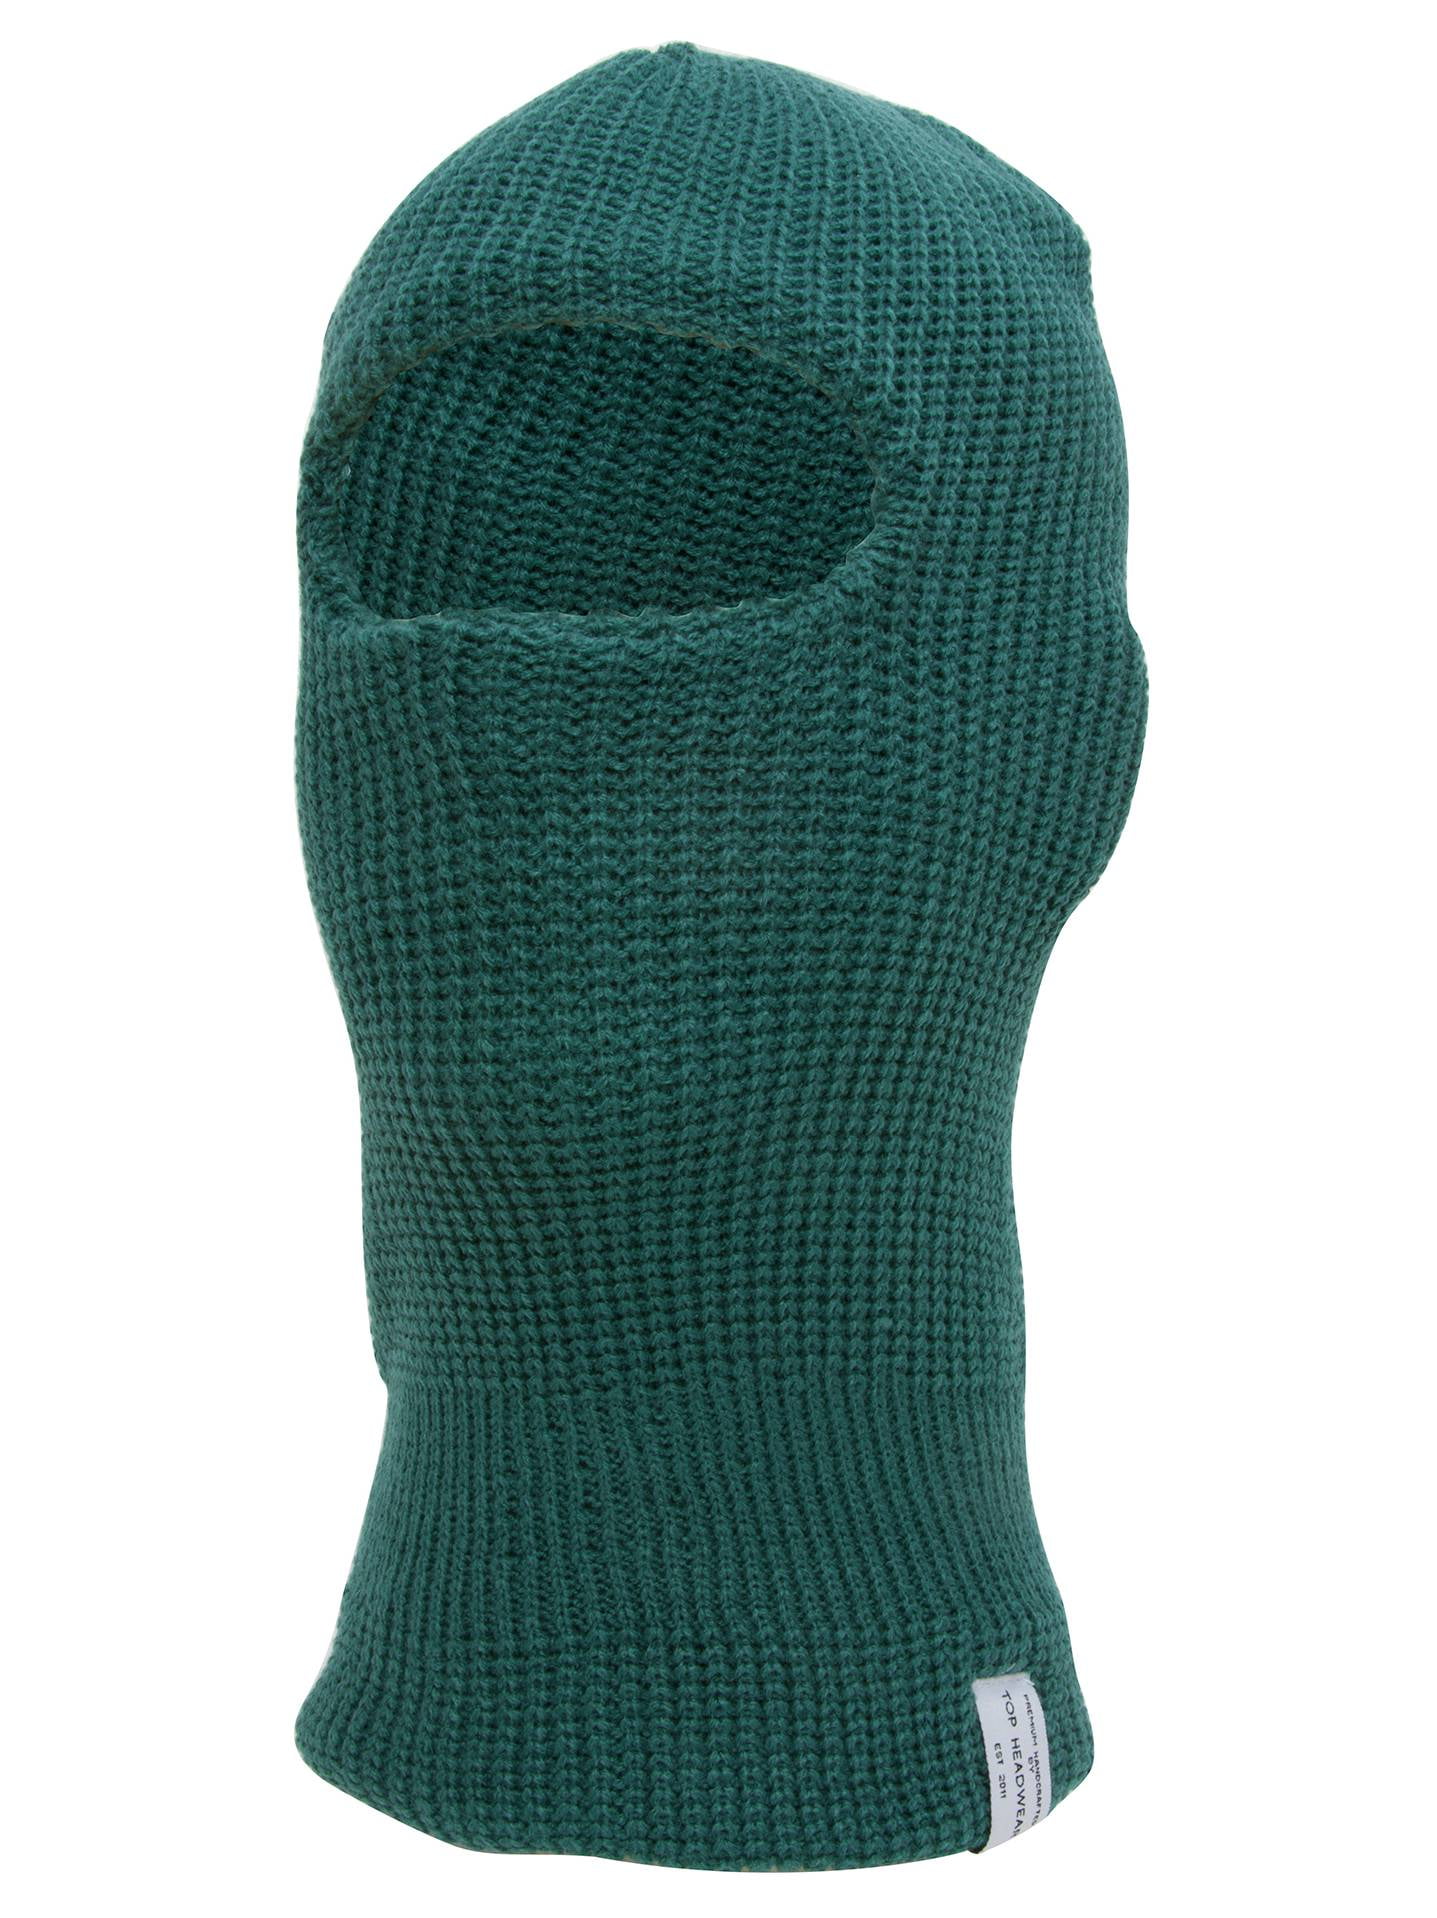 TopHeadwear One Hole Ski Mask - Turquoise - Walmart.com